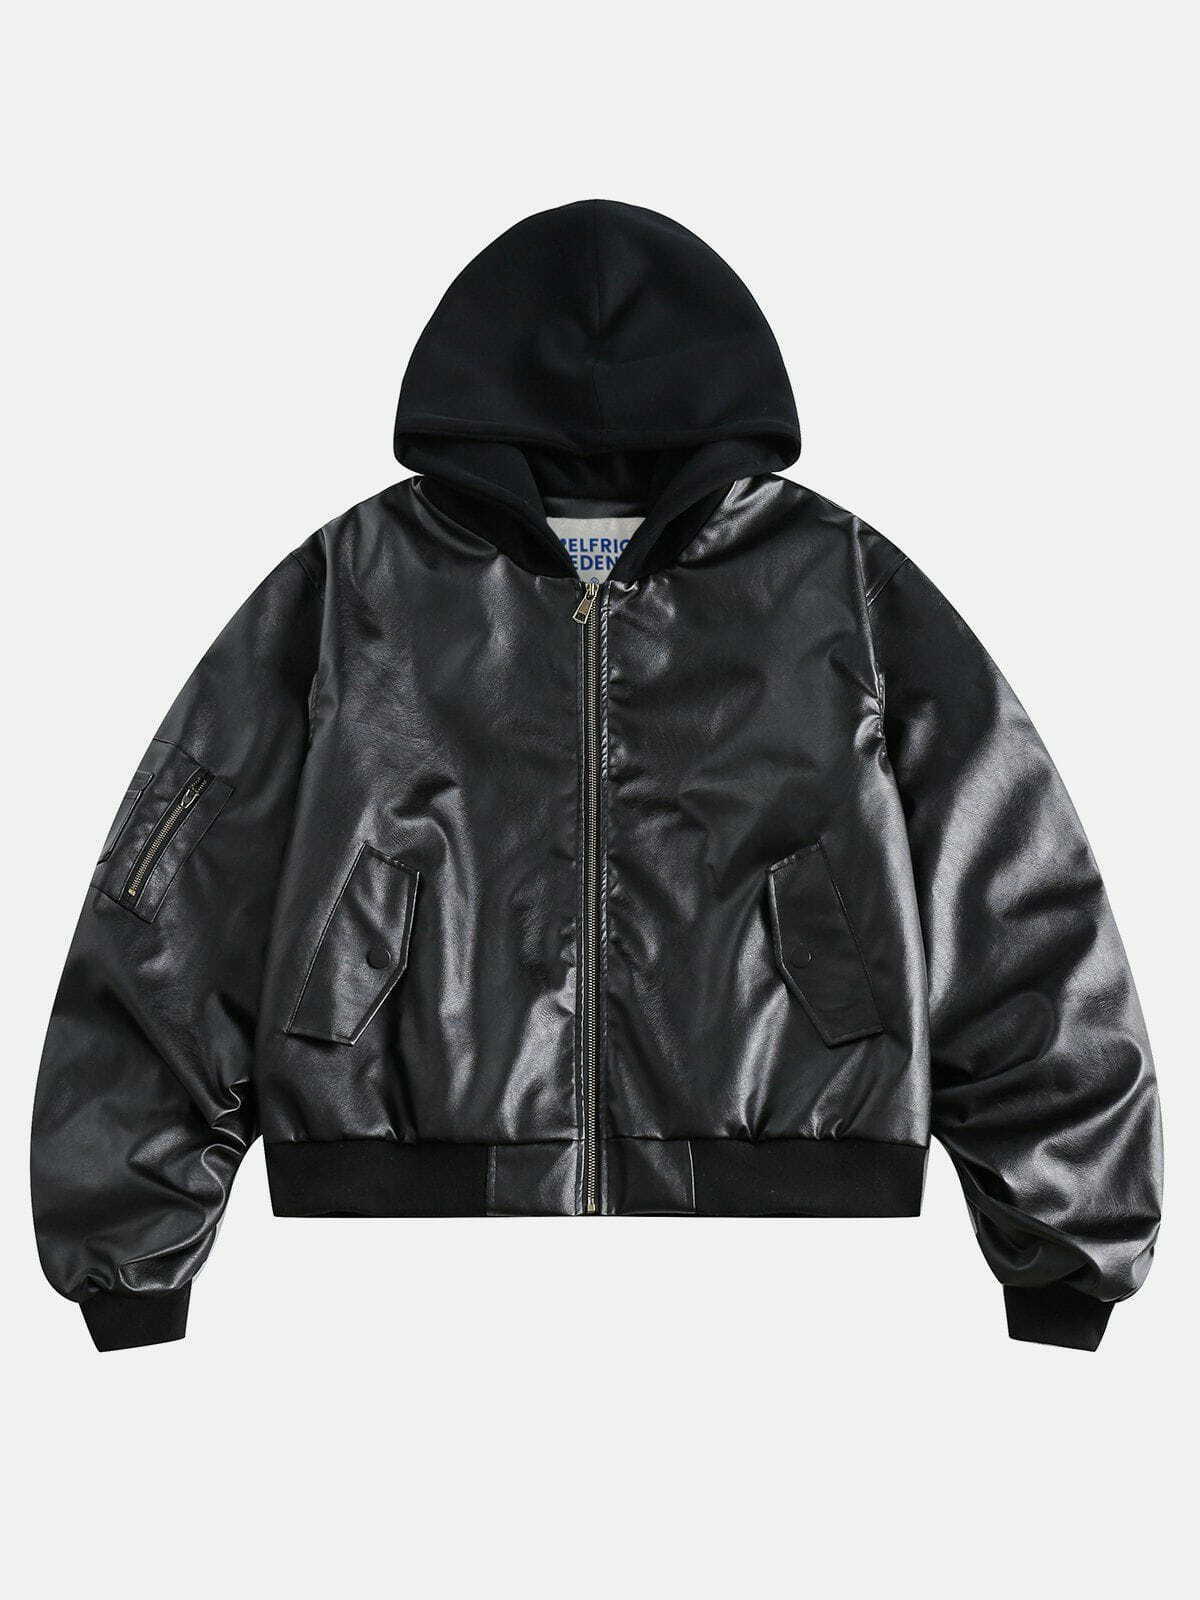 urban chic solid hooded bomber jacket   sleek design 3075